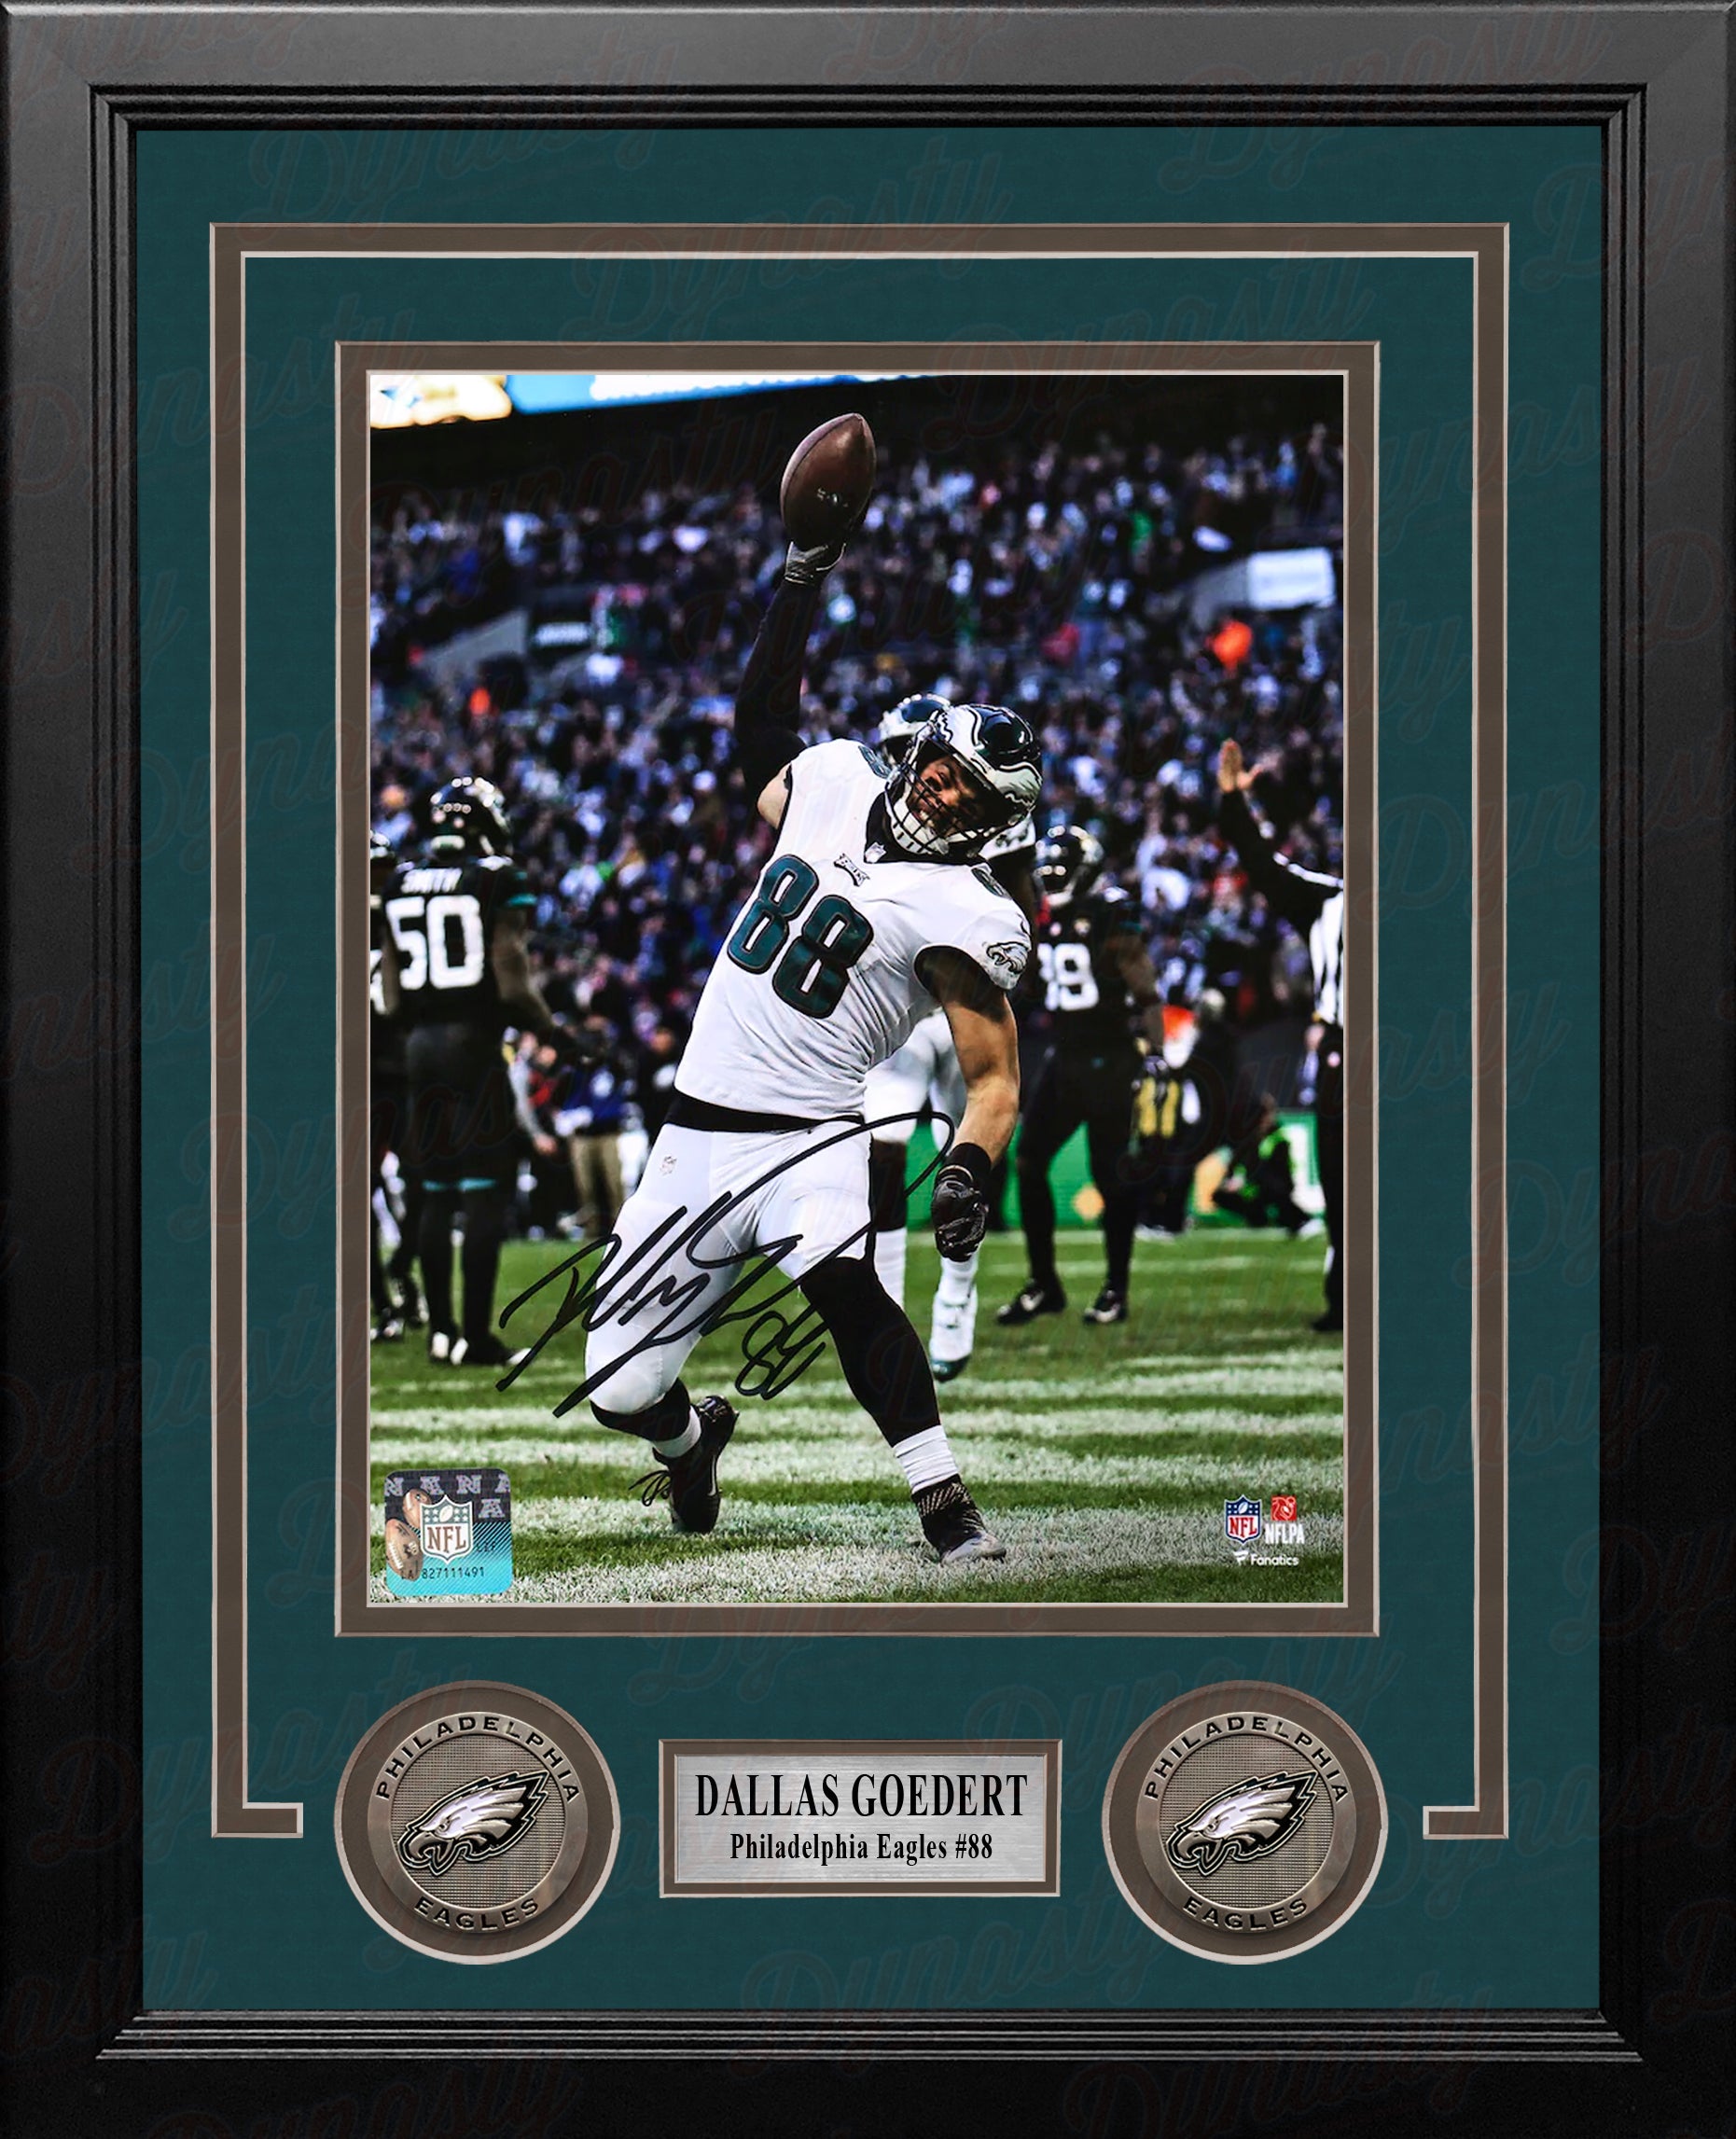 Dallas Goedert Touchdown Spike Philadelphia Eagles Autographed Framed Football Photo - Dynasty Sports & Framing 